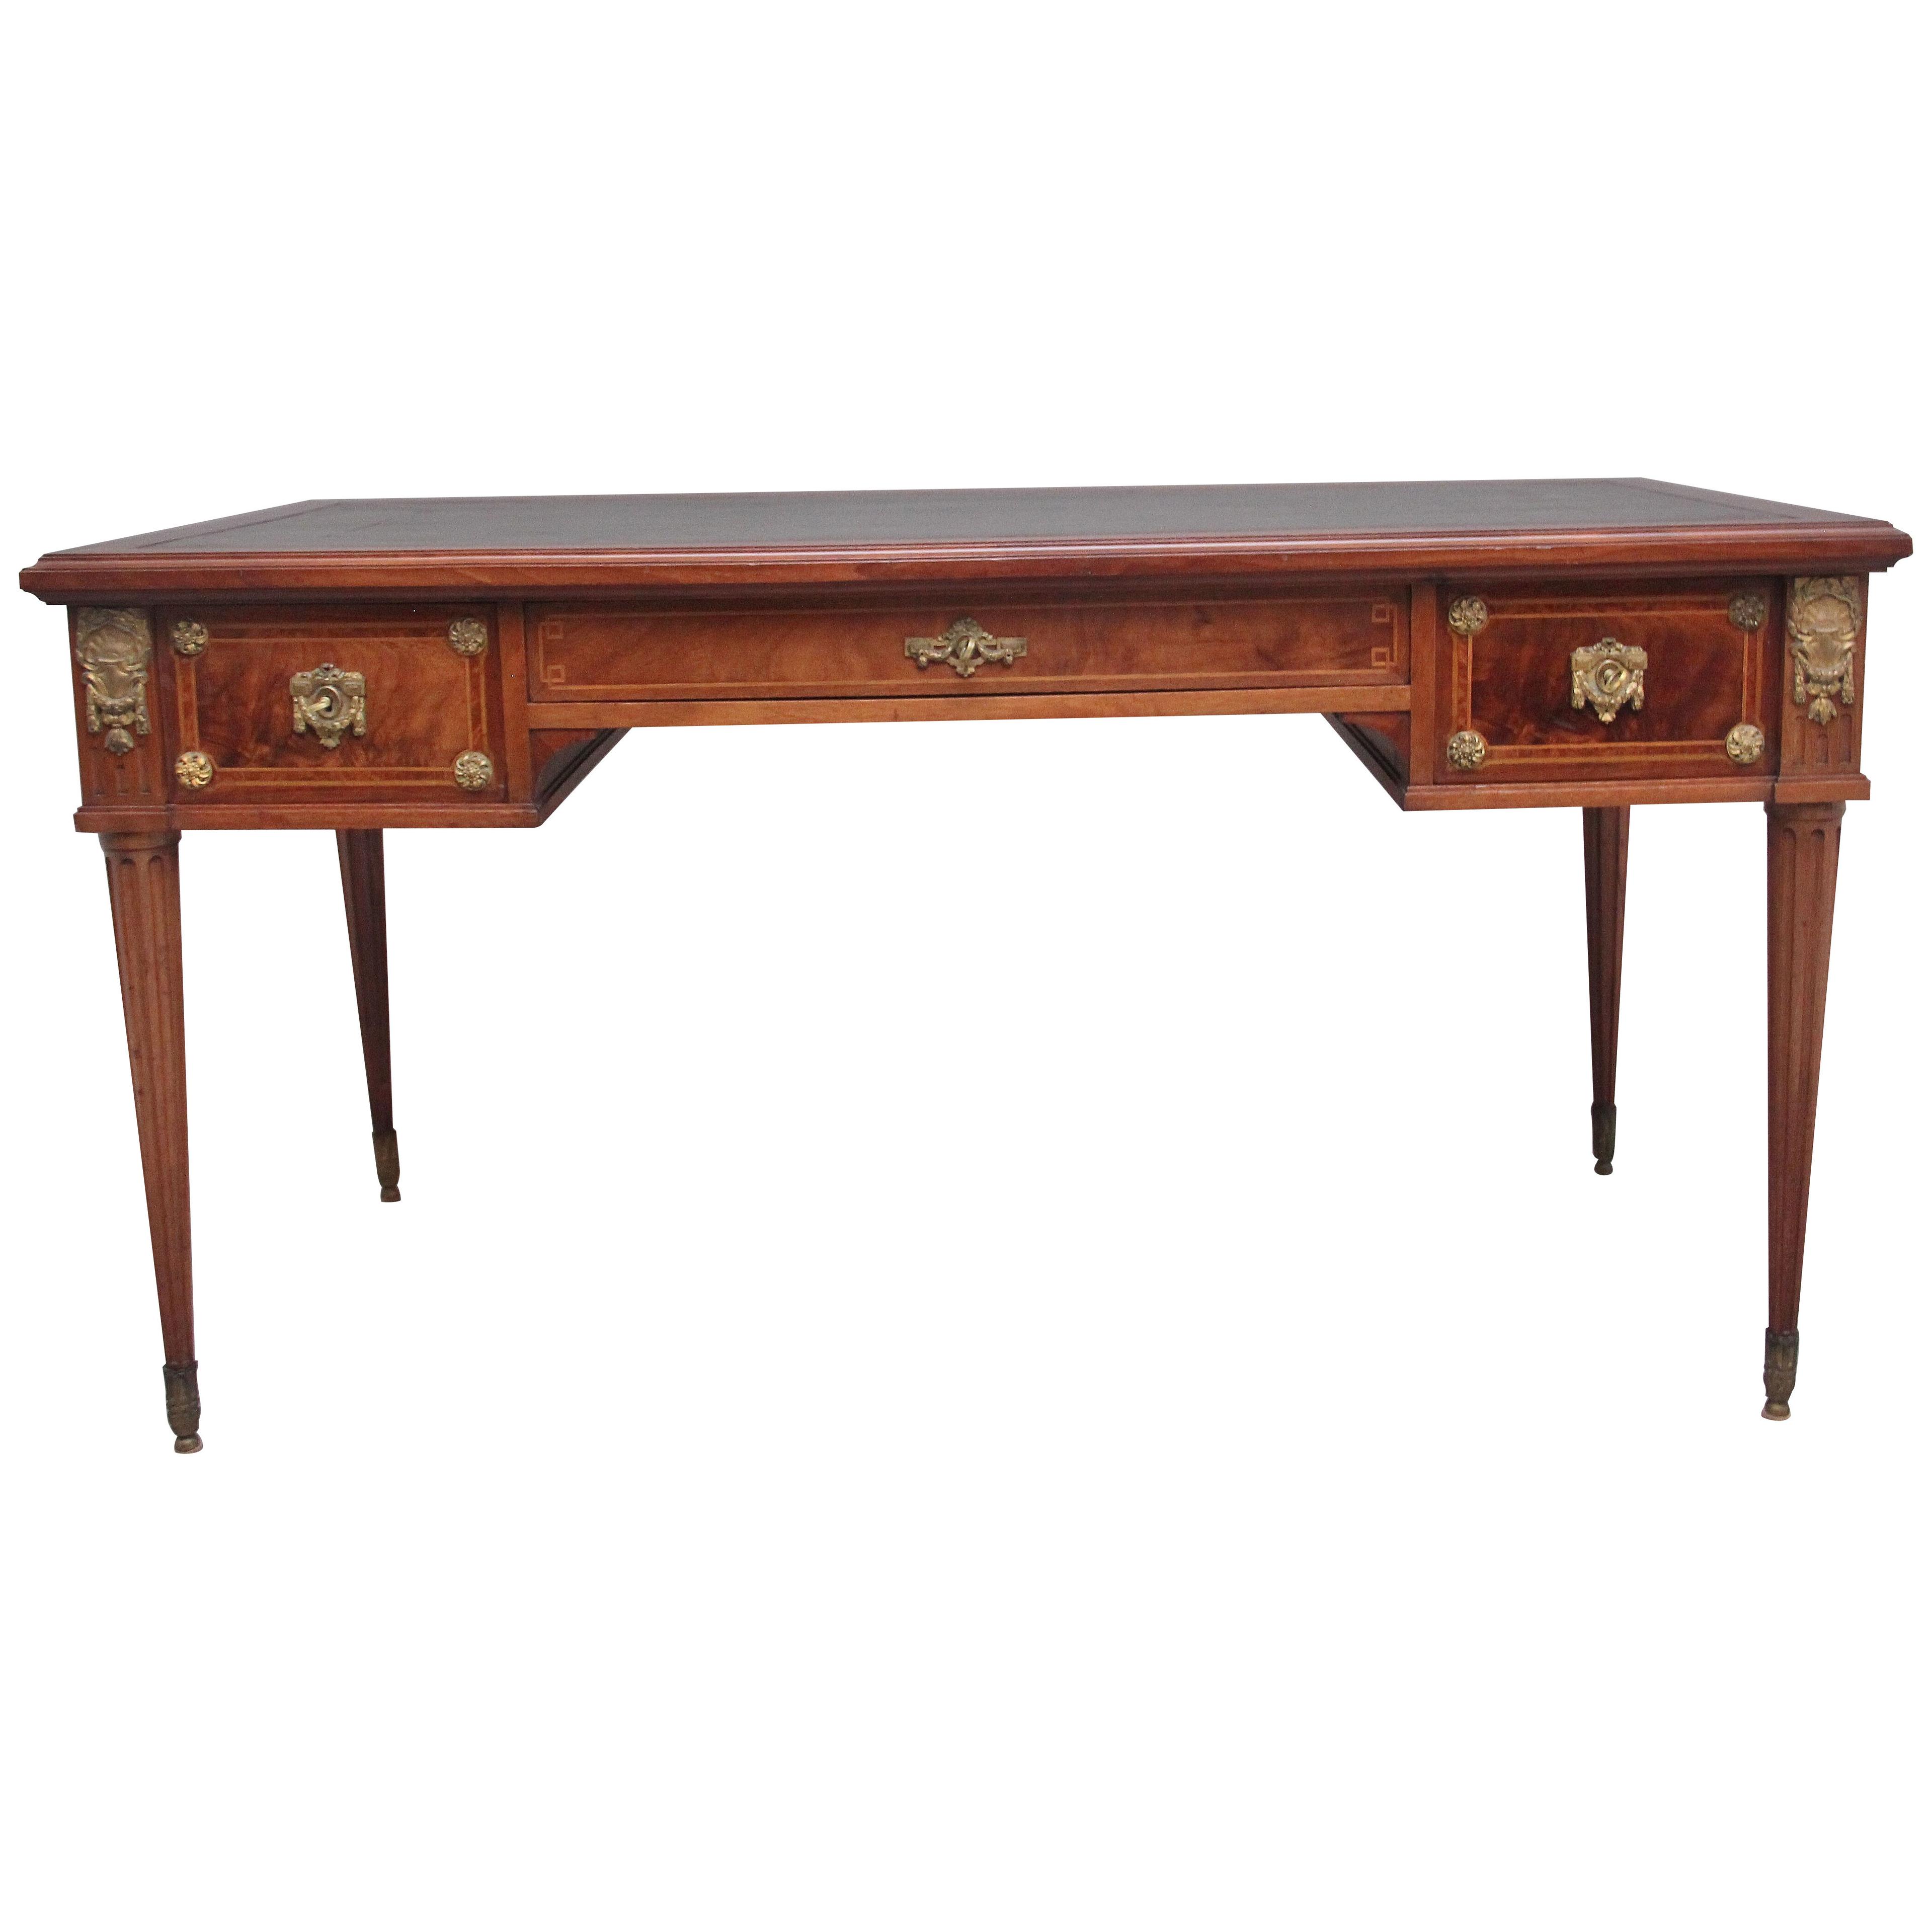 19th Century antique French mahogany desk